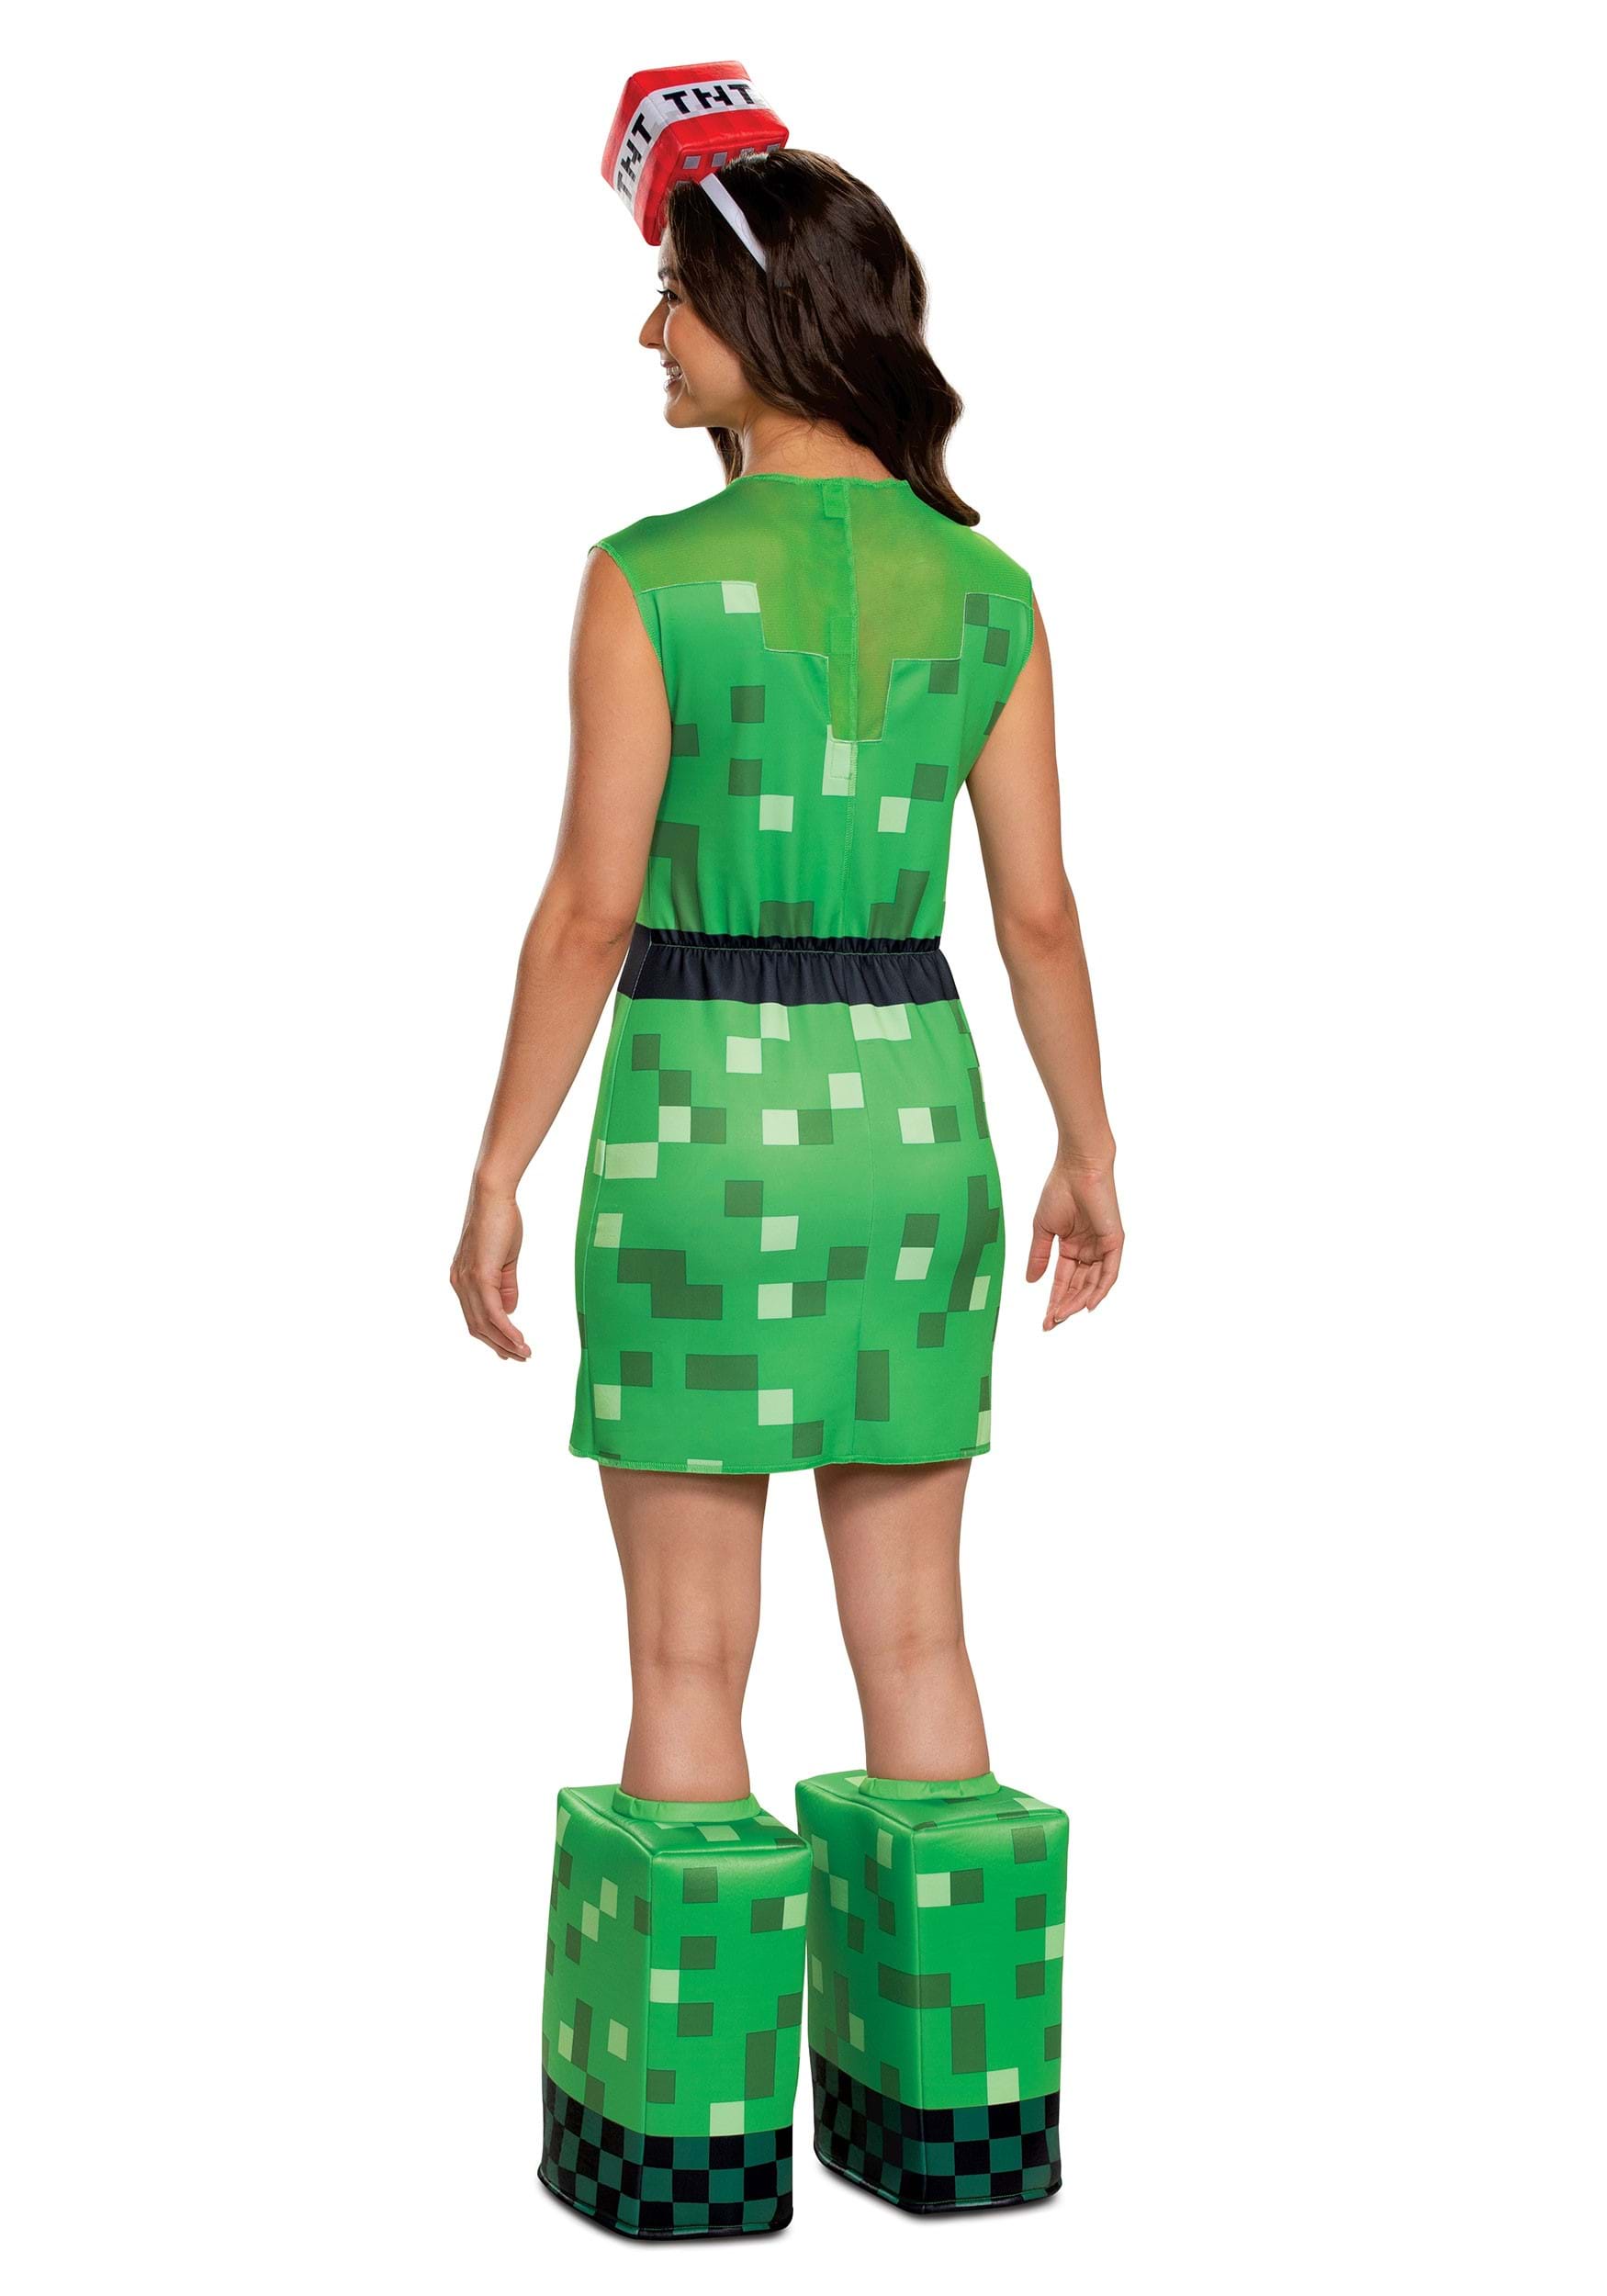 Minecraft Creeper Costume for Women